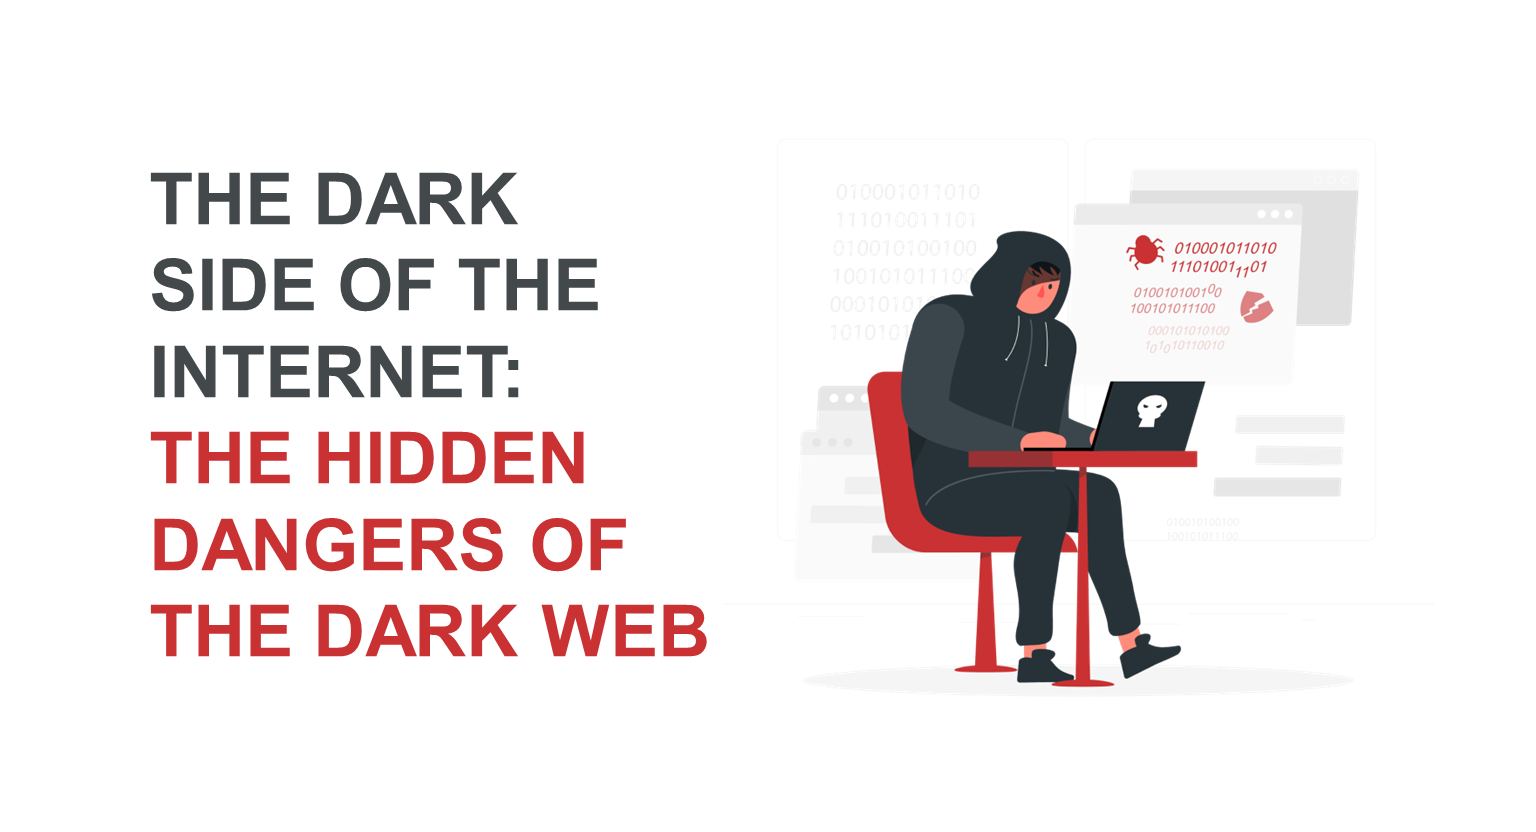 The dark side of the internet: the hidden dangers of the dark web